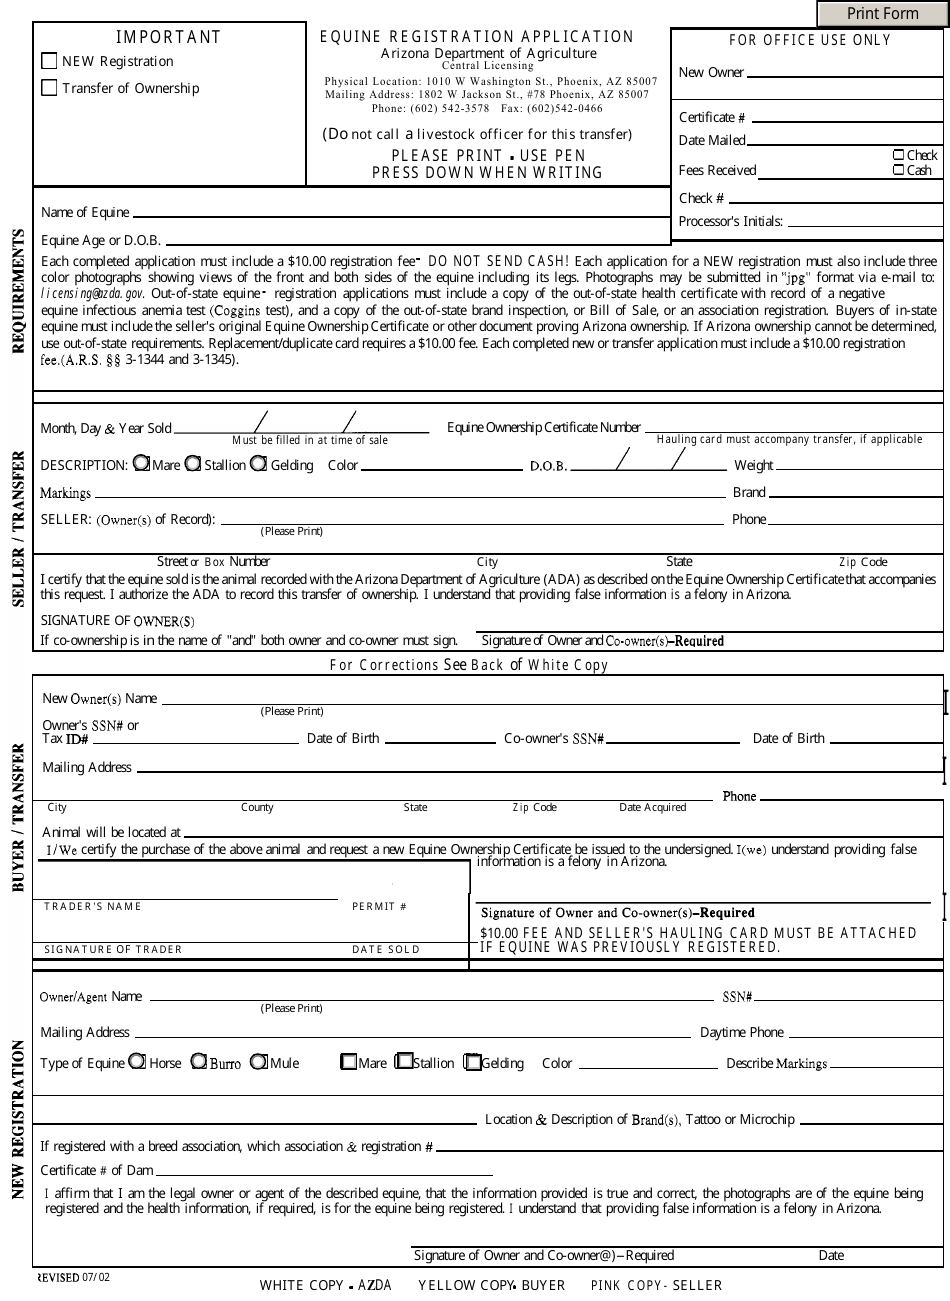 Equine Registration Application - Arizona, Page 1